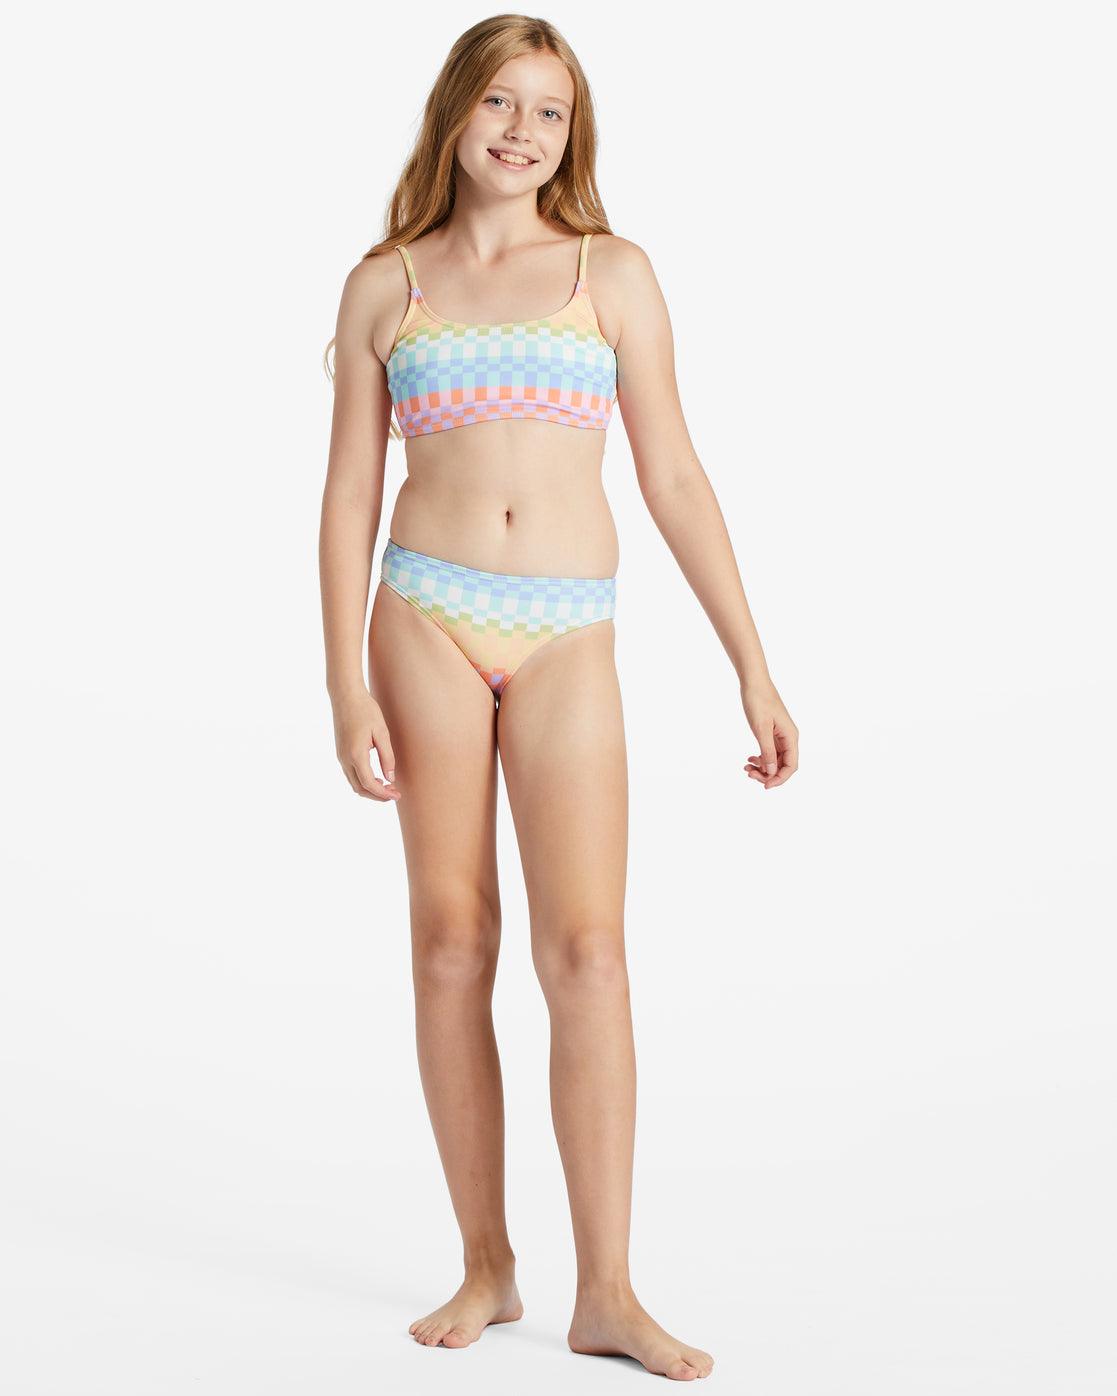 Paradise Check - Two Piece Trilet Bikini Set for Girls 4-14 | BILLABONG | Beachin Surf